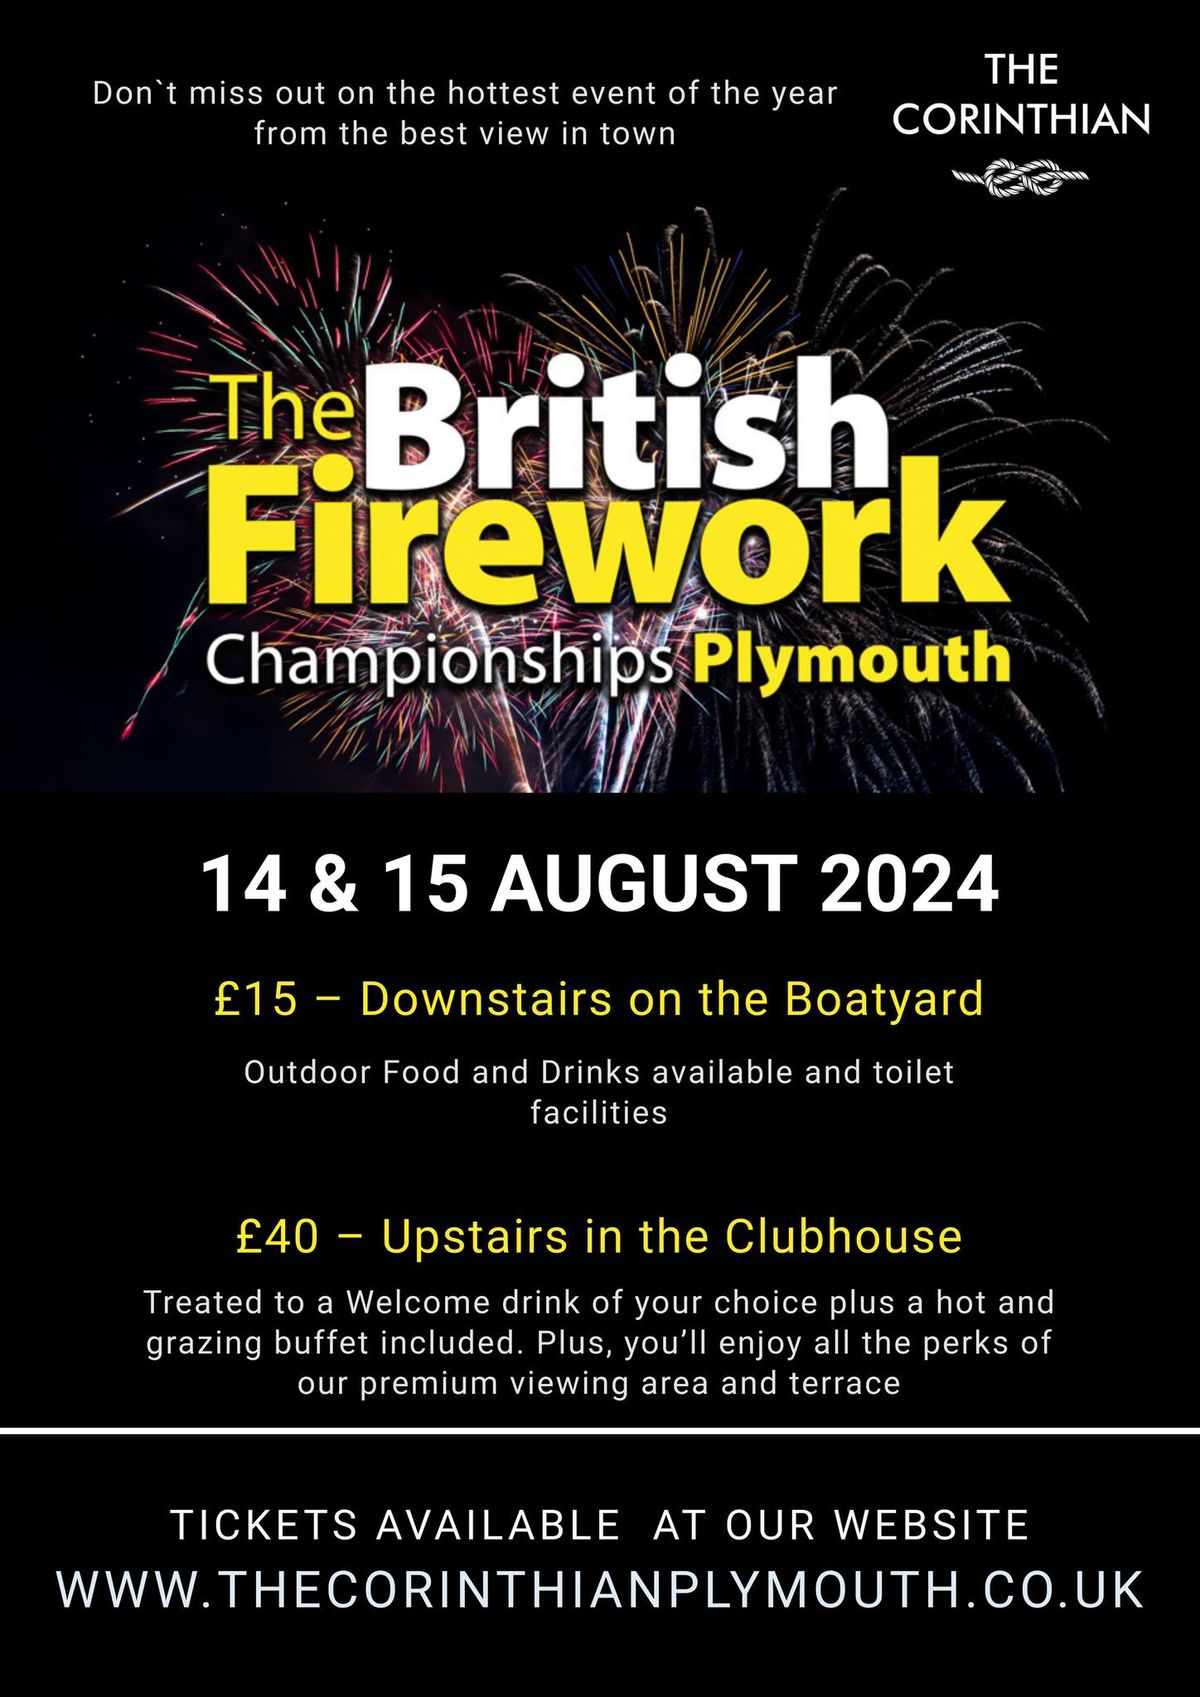 The British Fireworks Championship Plymouth @ The Corinthian  